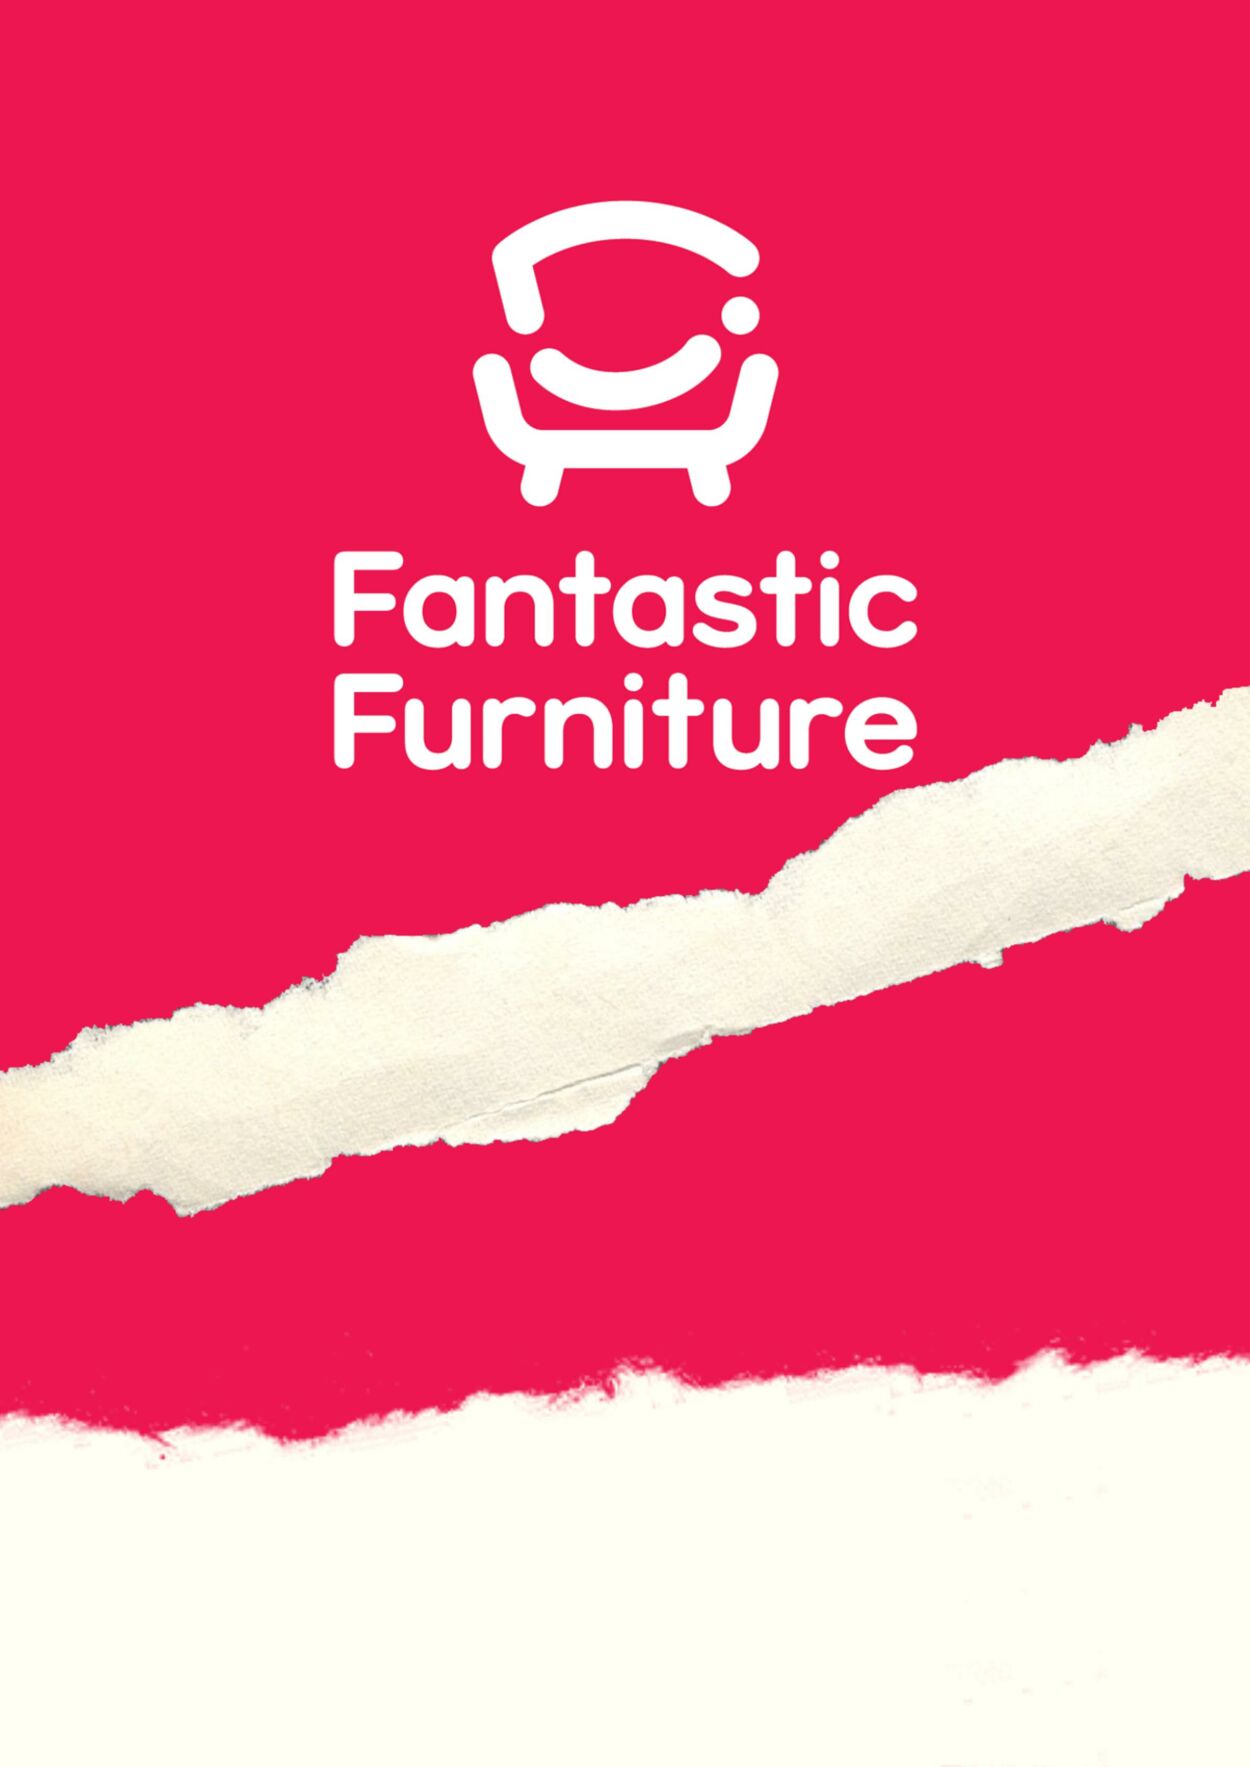 Fantastic Furniture Promotional catalogues